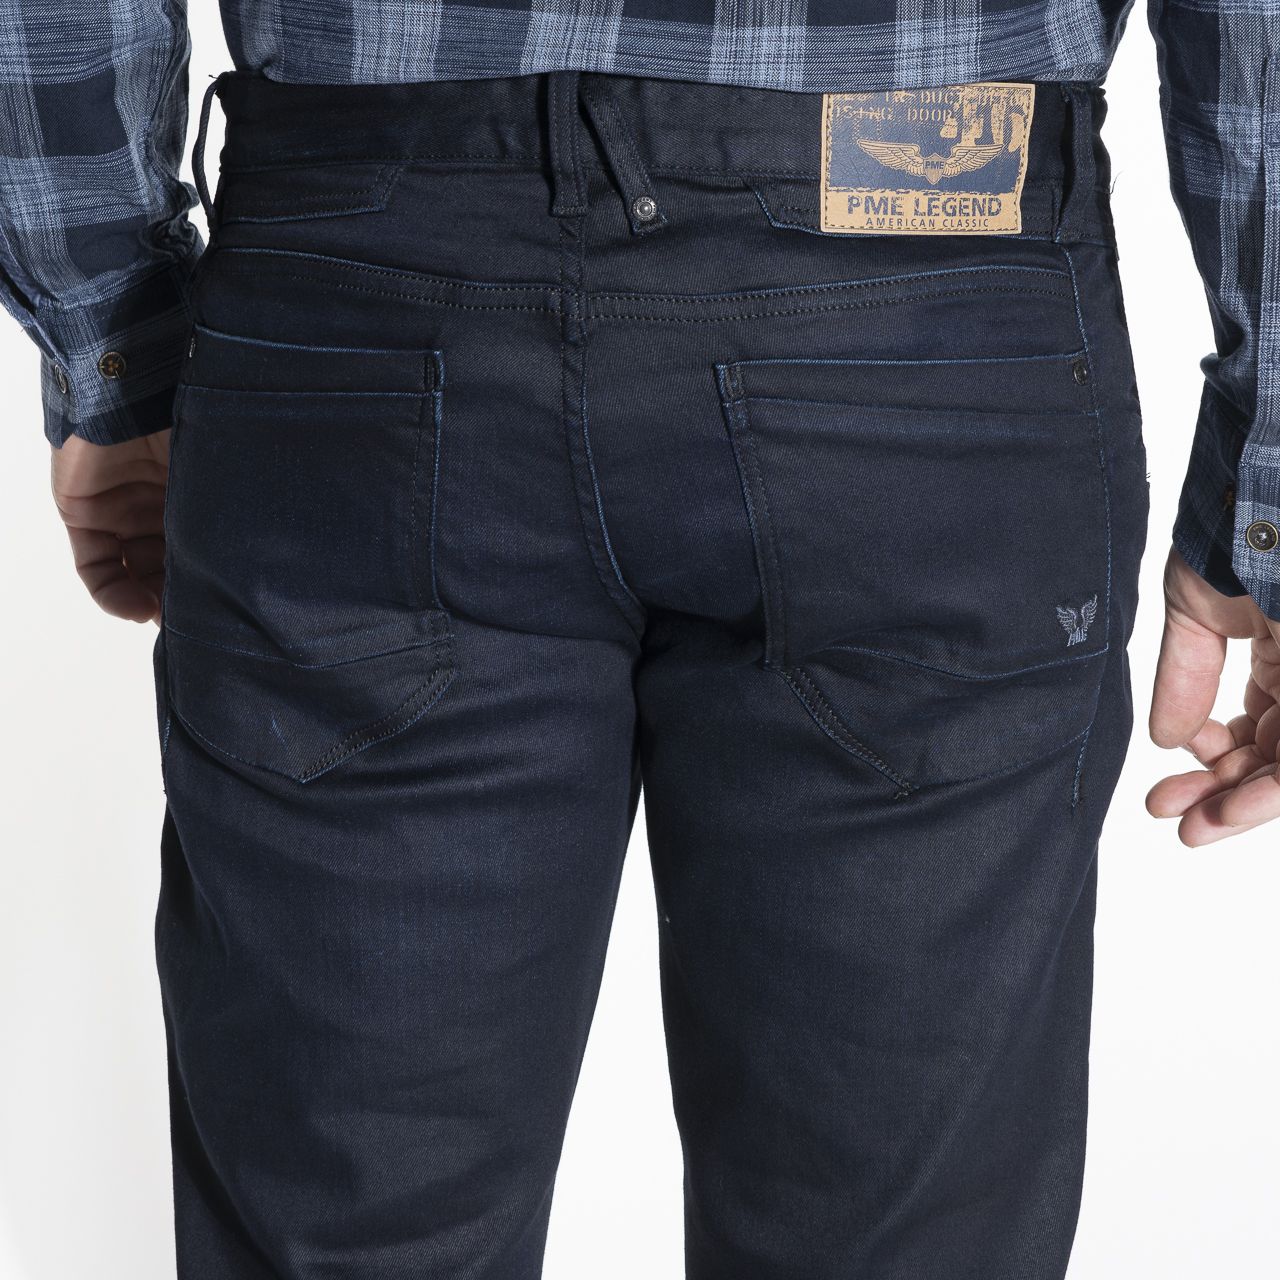 eigendom applaus Wrak PME Legend Curtis Jeans | Shop nu - Only for Men